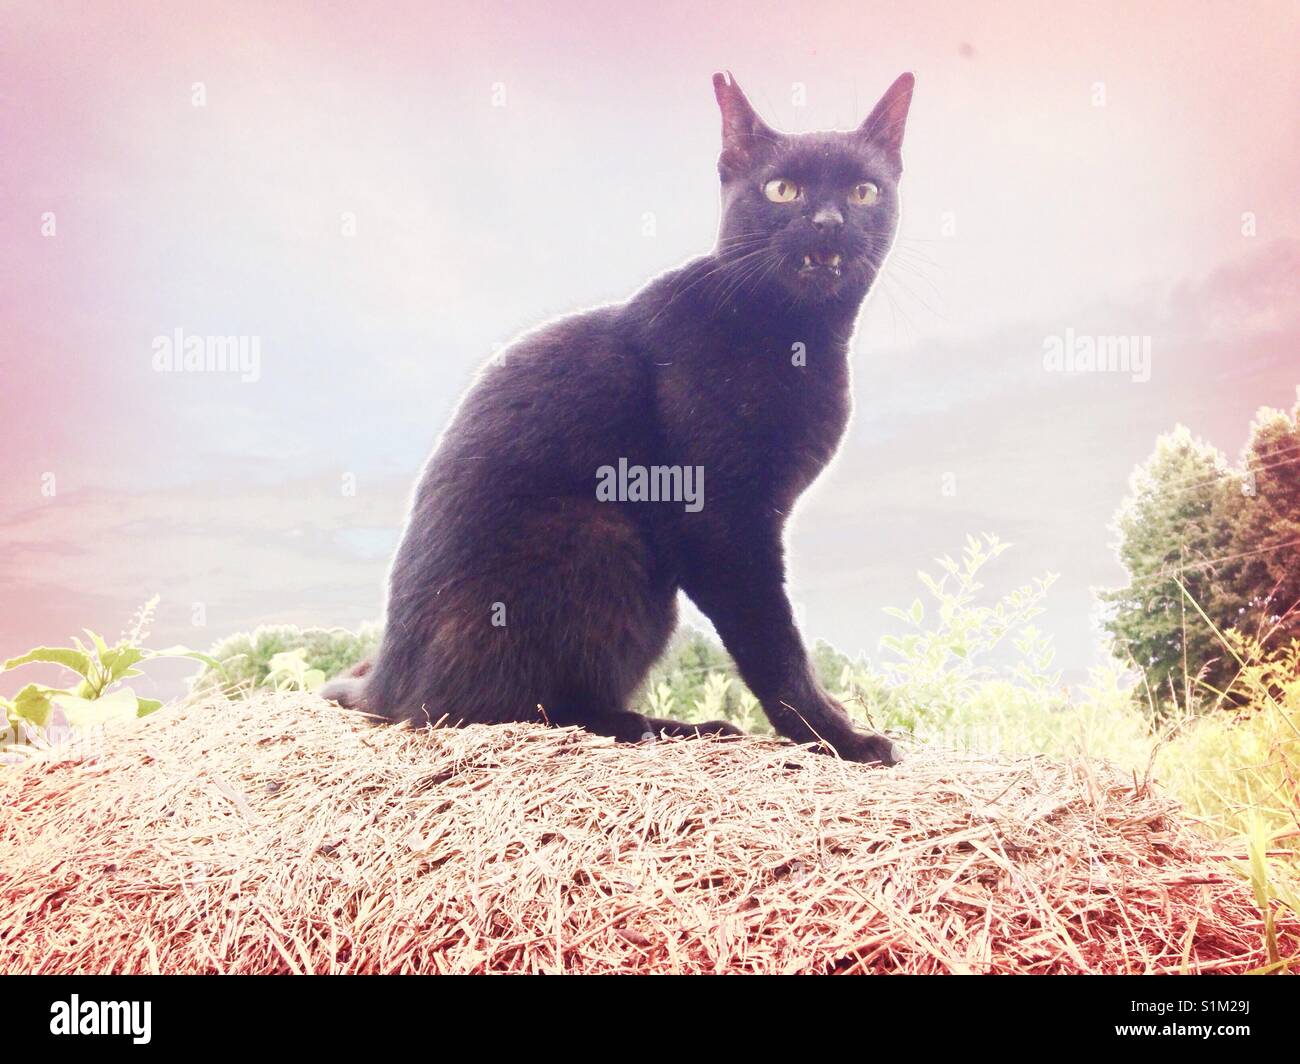 White fangs, black cat Stock Photo